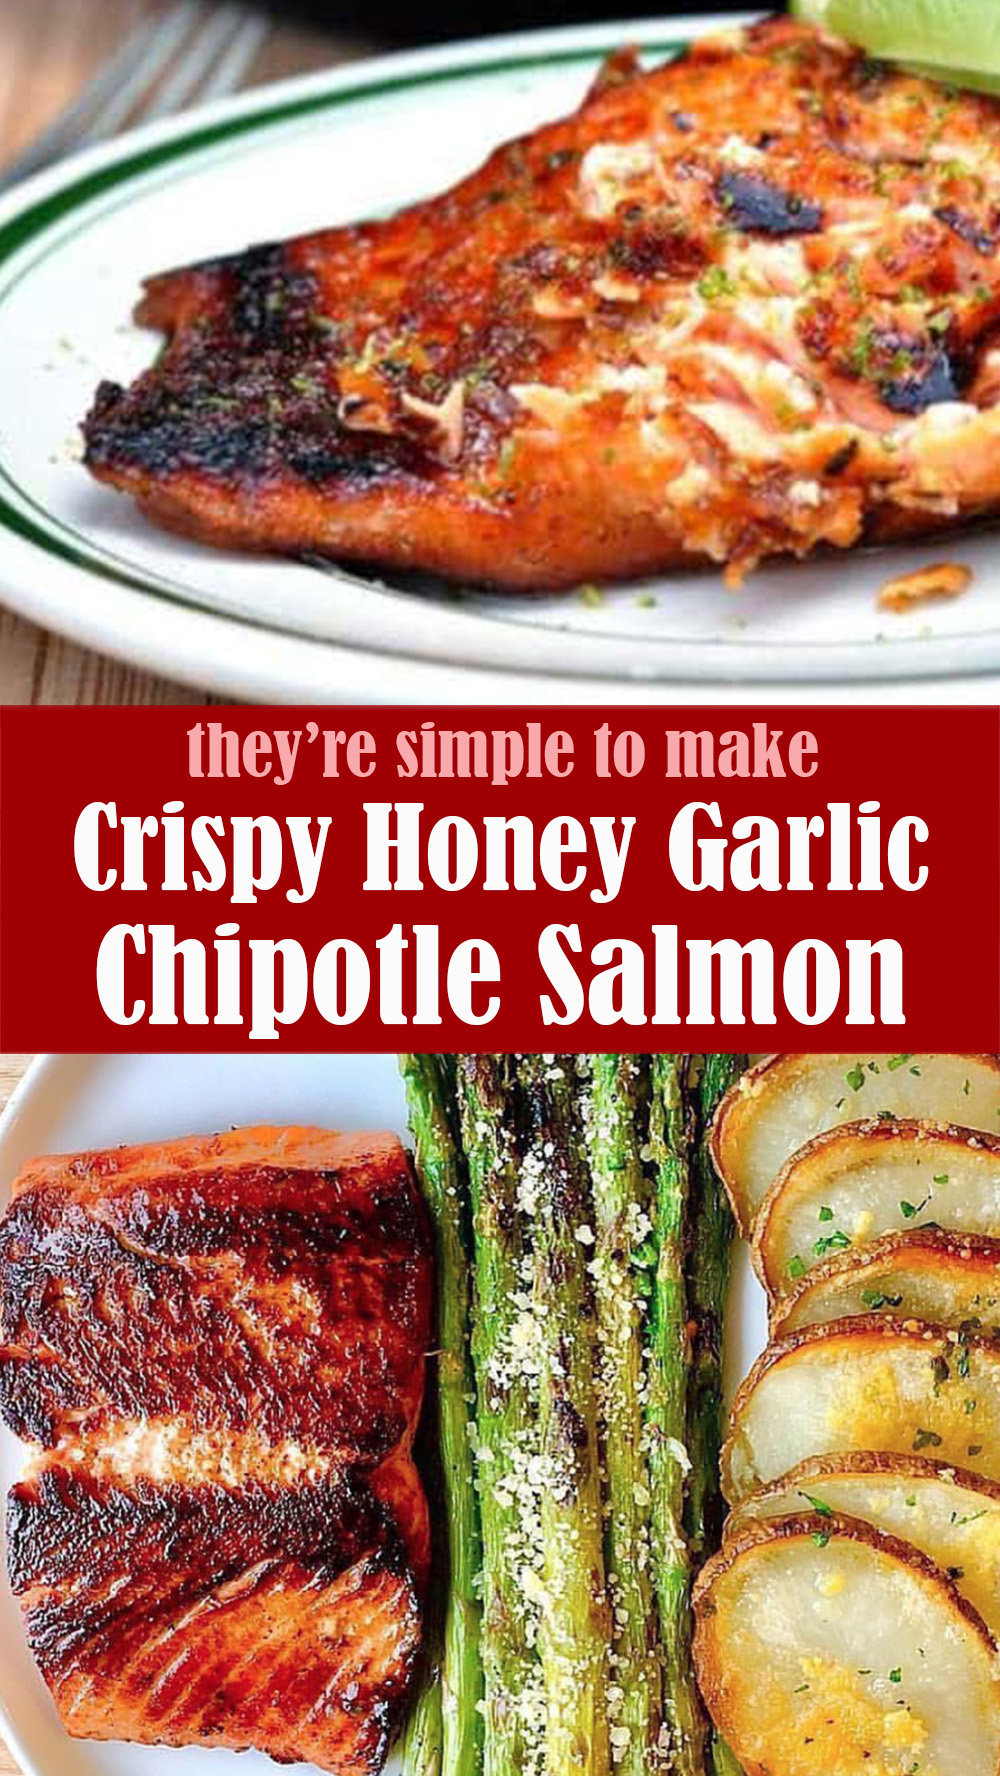 Crispy Honey Garlic Chipotle Salmon